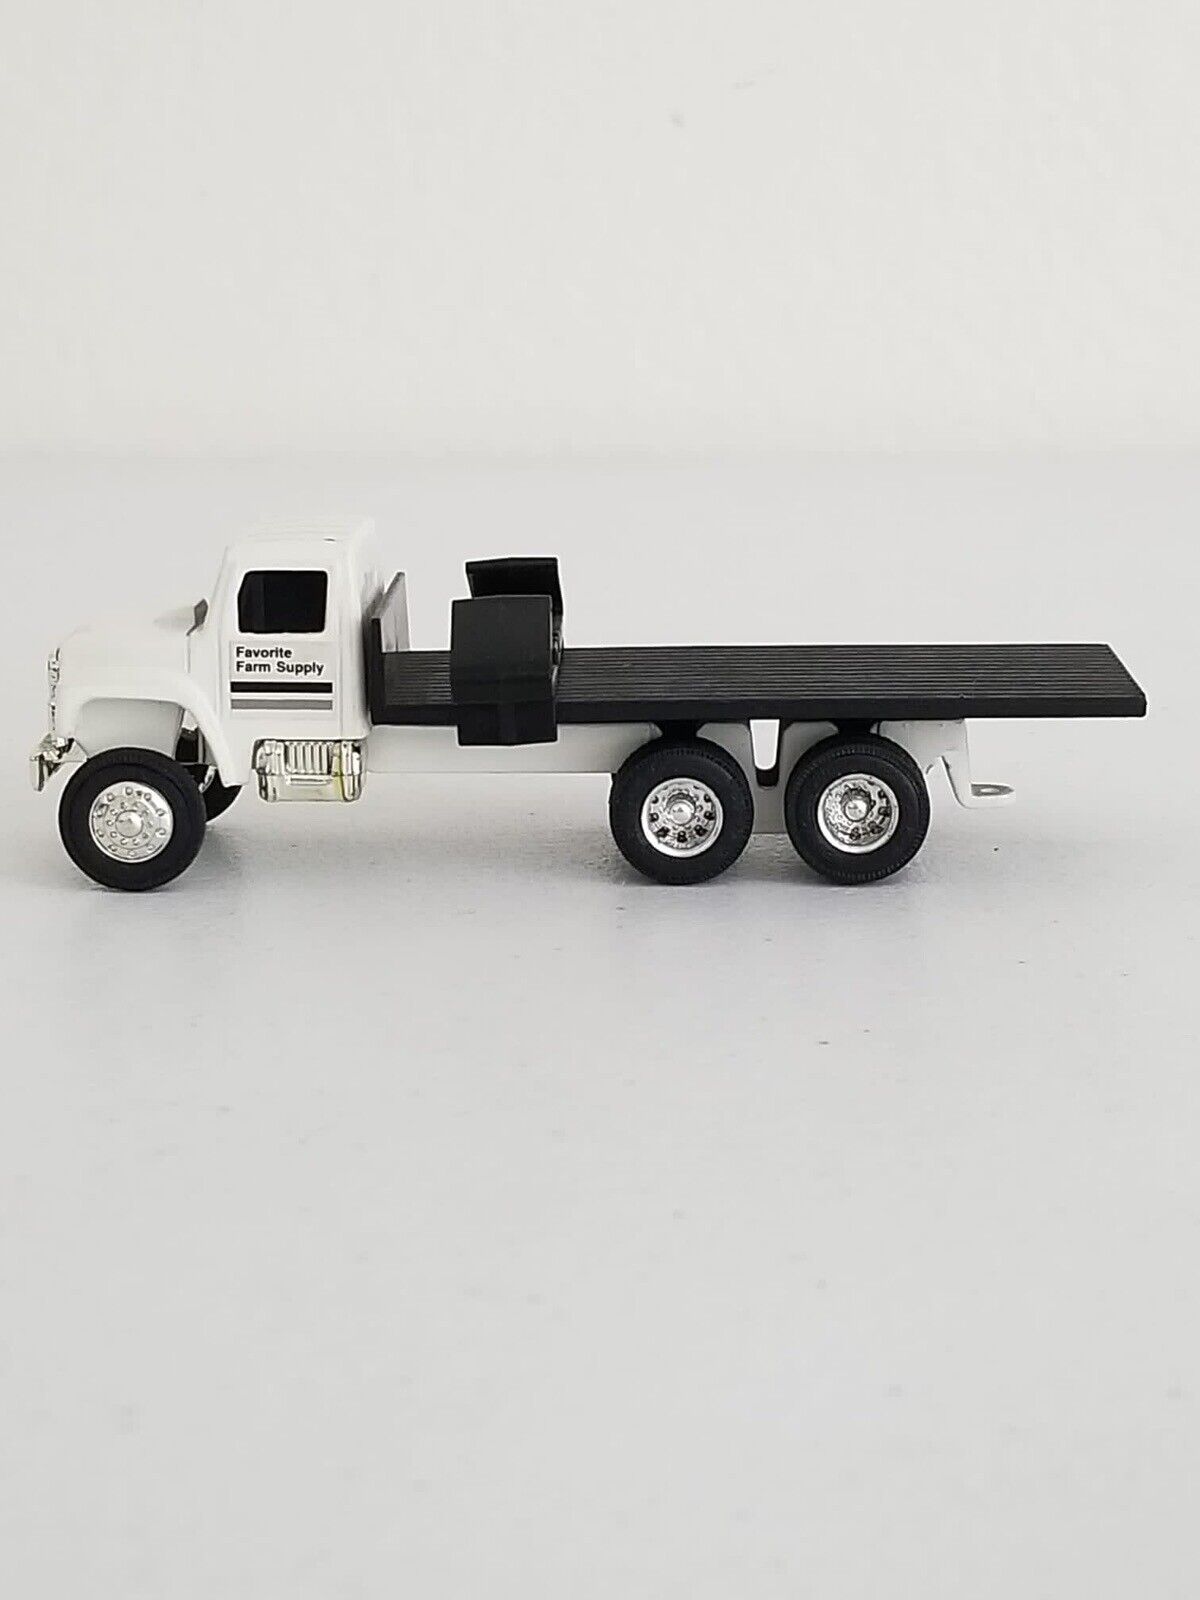 1/64 Scale Favorite Farm Supply Truck Die-Cast Collectible Model – Detailed Replica - TreasuTiques